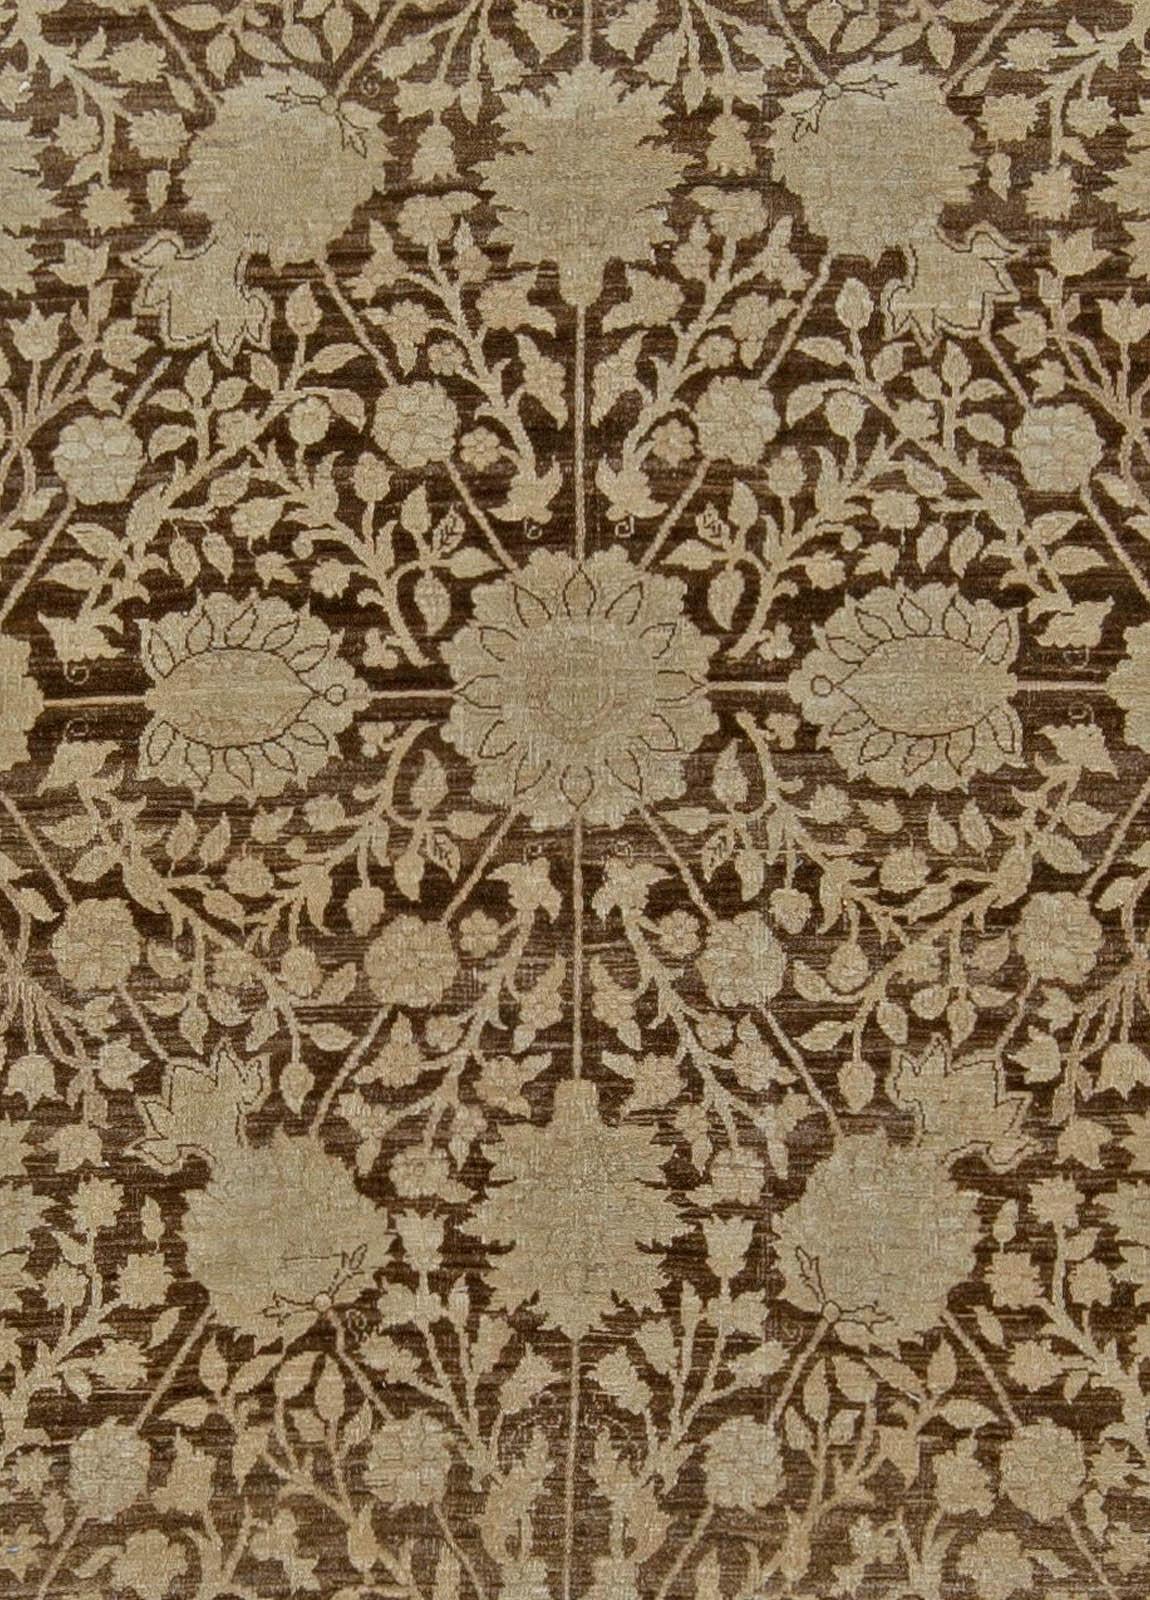 Contemporary Tabriz beige and brown wool rug by Doris Leslie Blau.
Size: 9'9